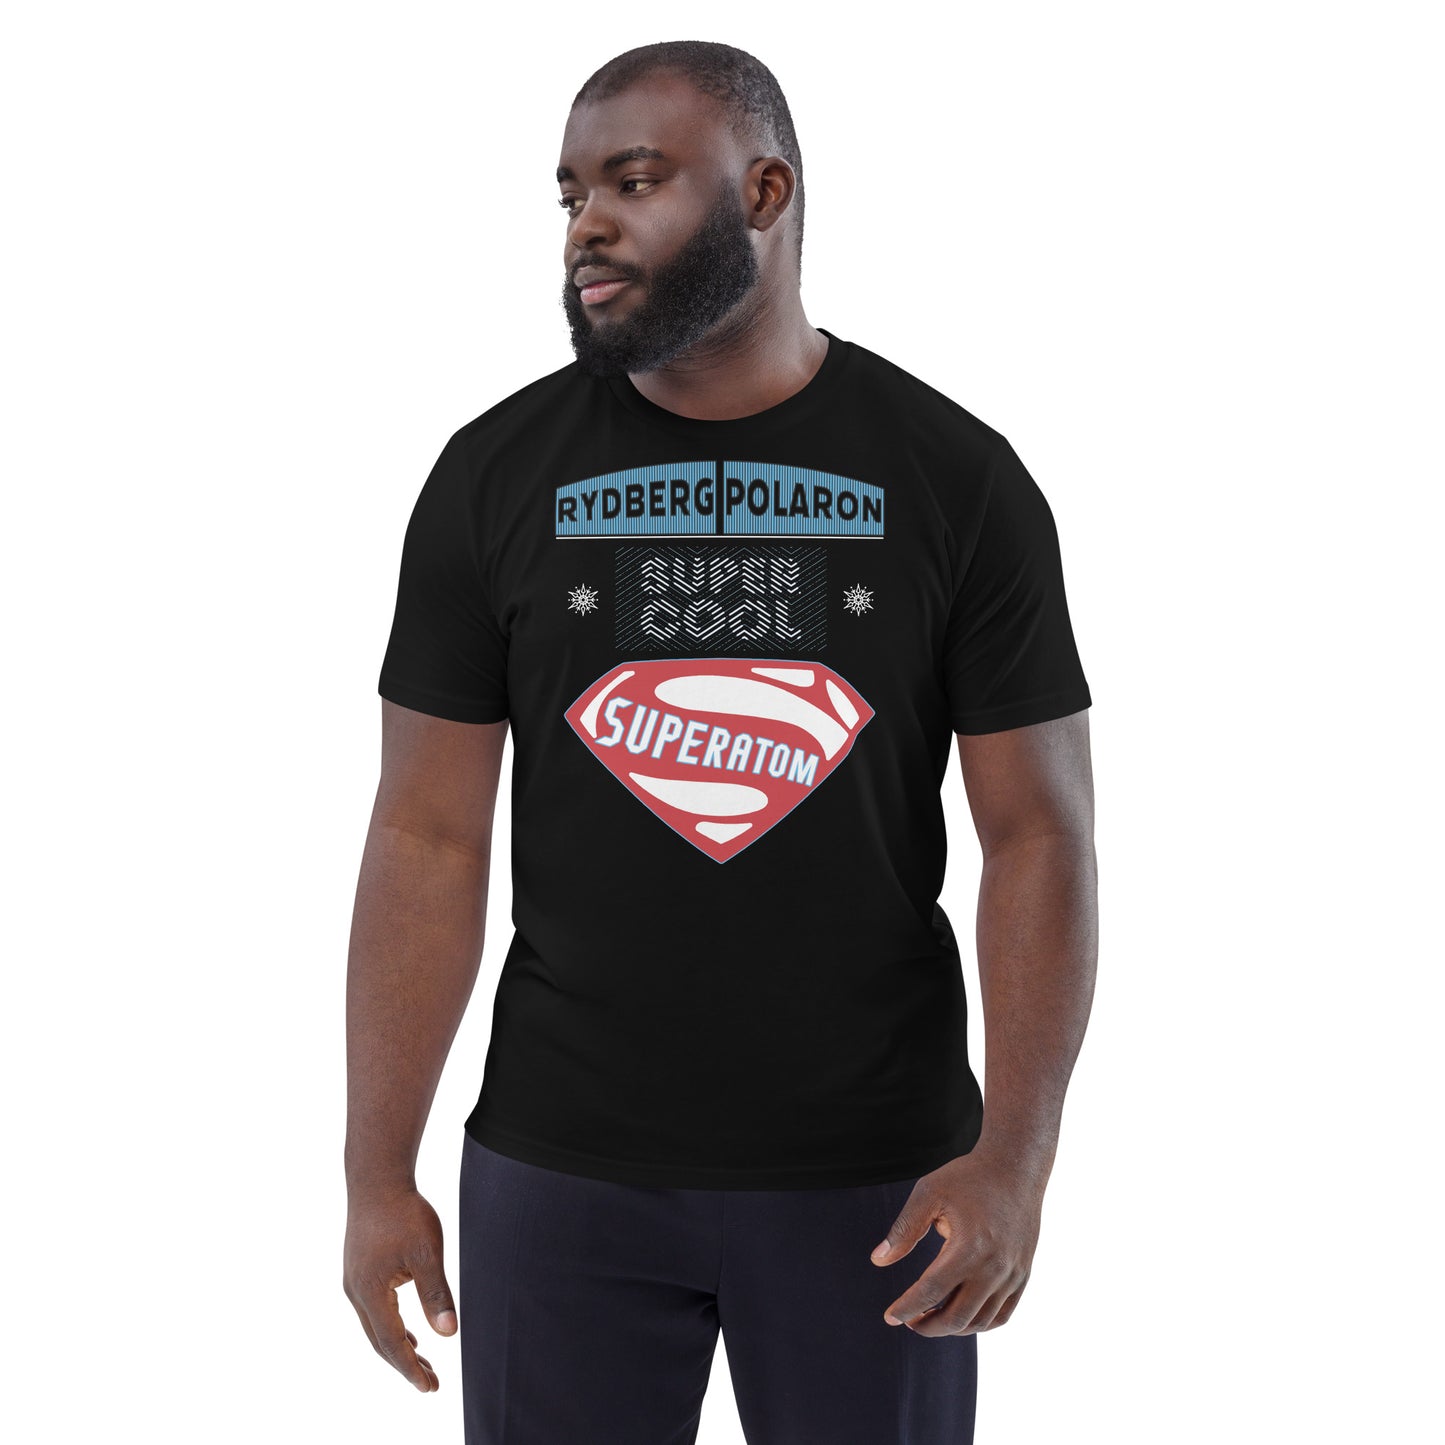 Unisex organic cotton t-shirt: Superatom – Paul Sutter’s cooler name for a Rydberg Polaron!